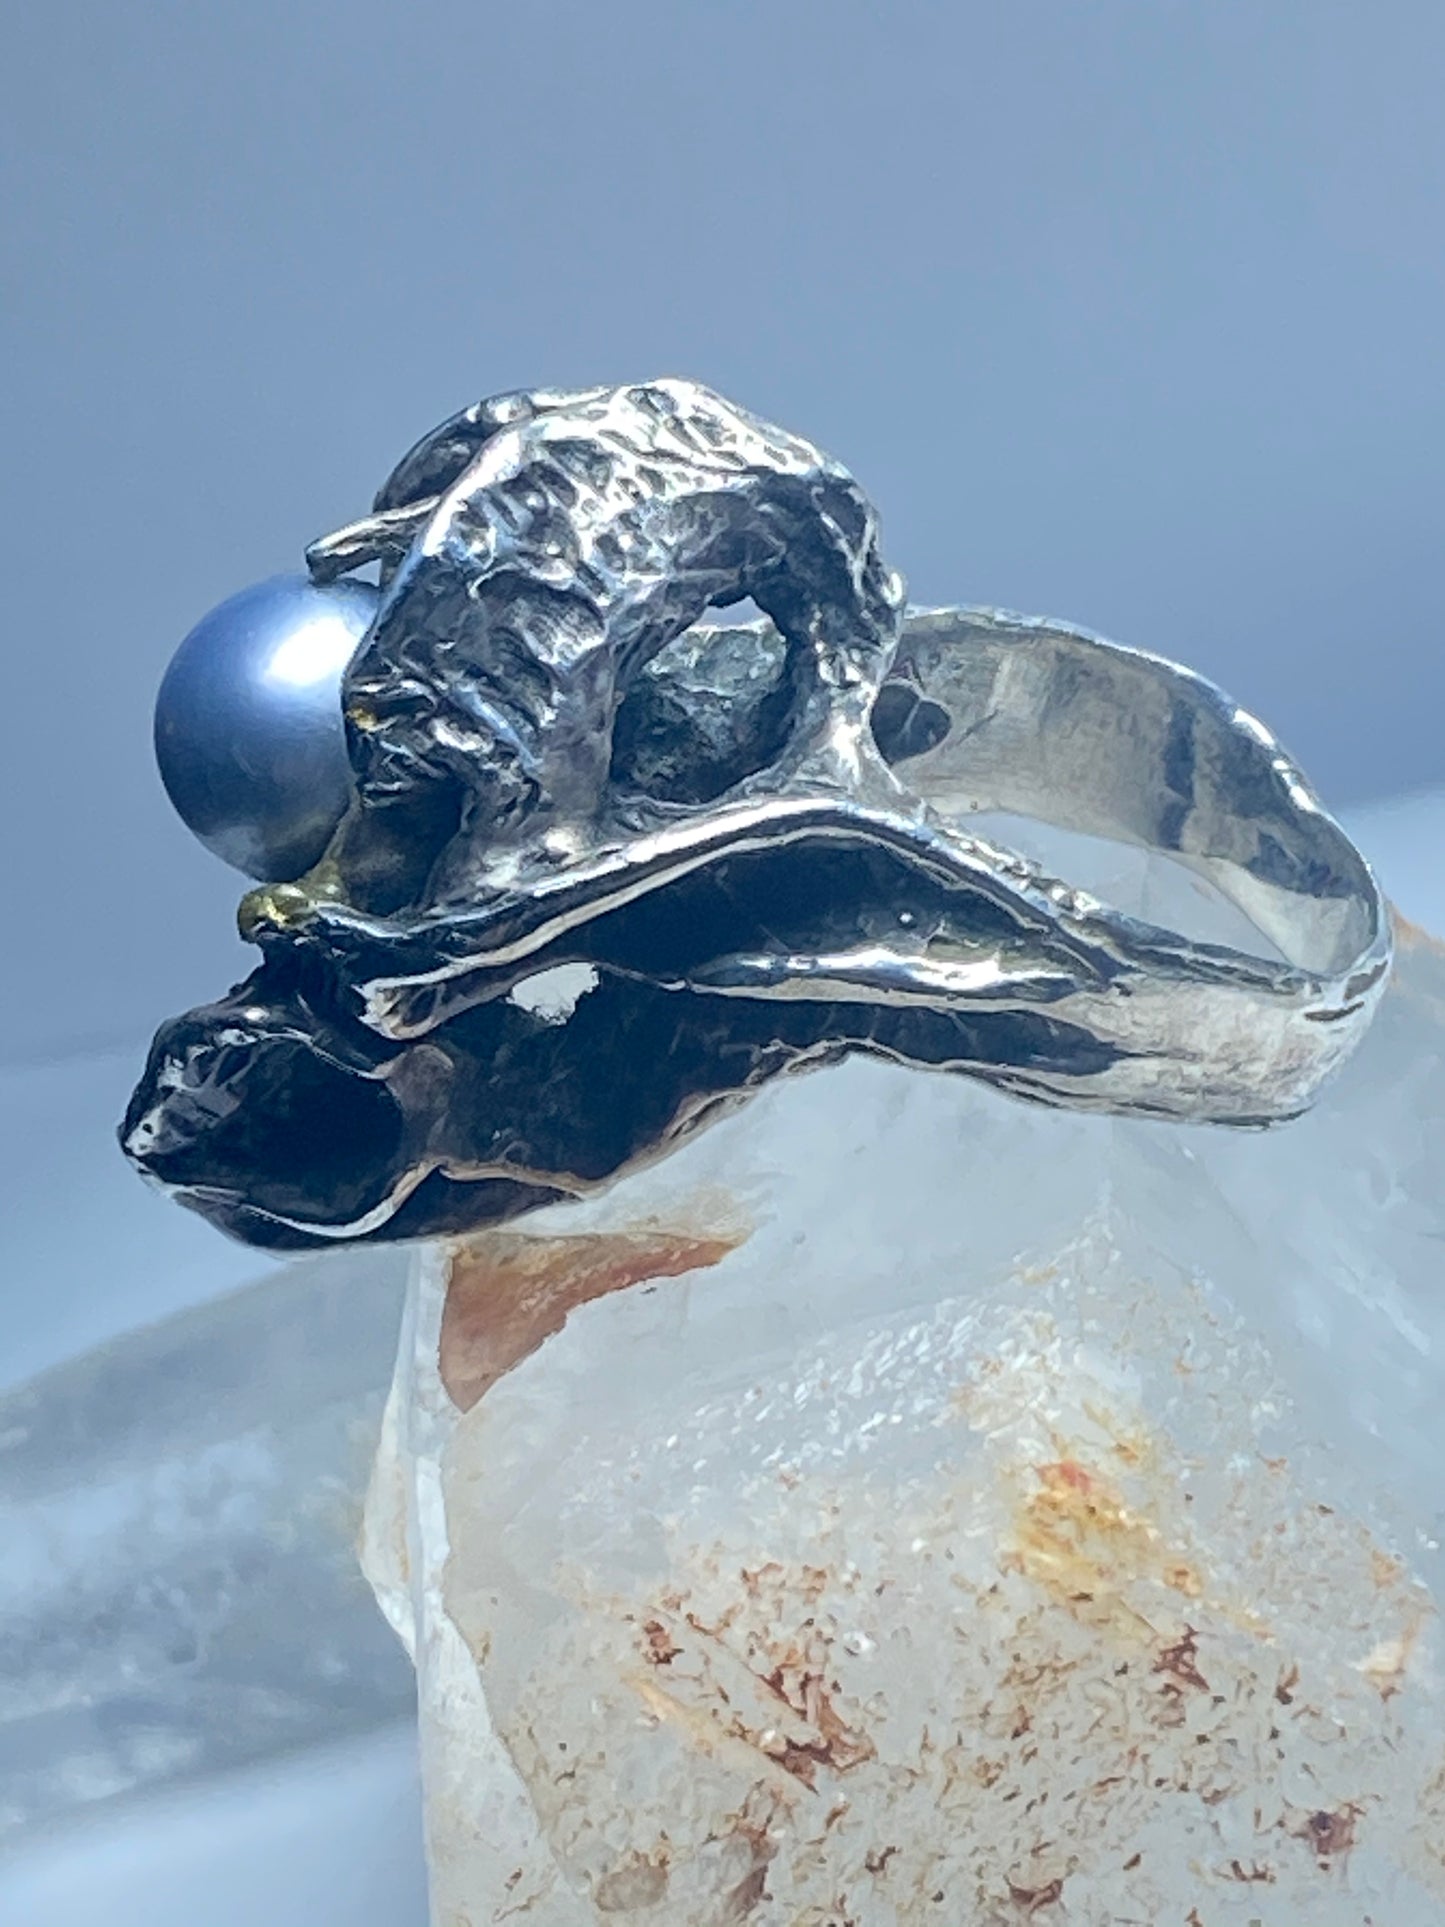 Brutalist Ring size 7 chromed pearl sterling silver women